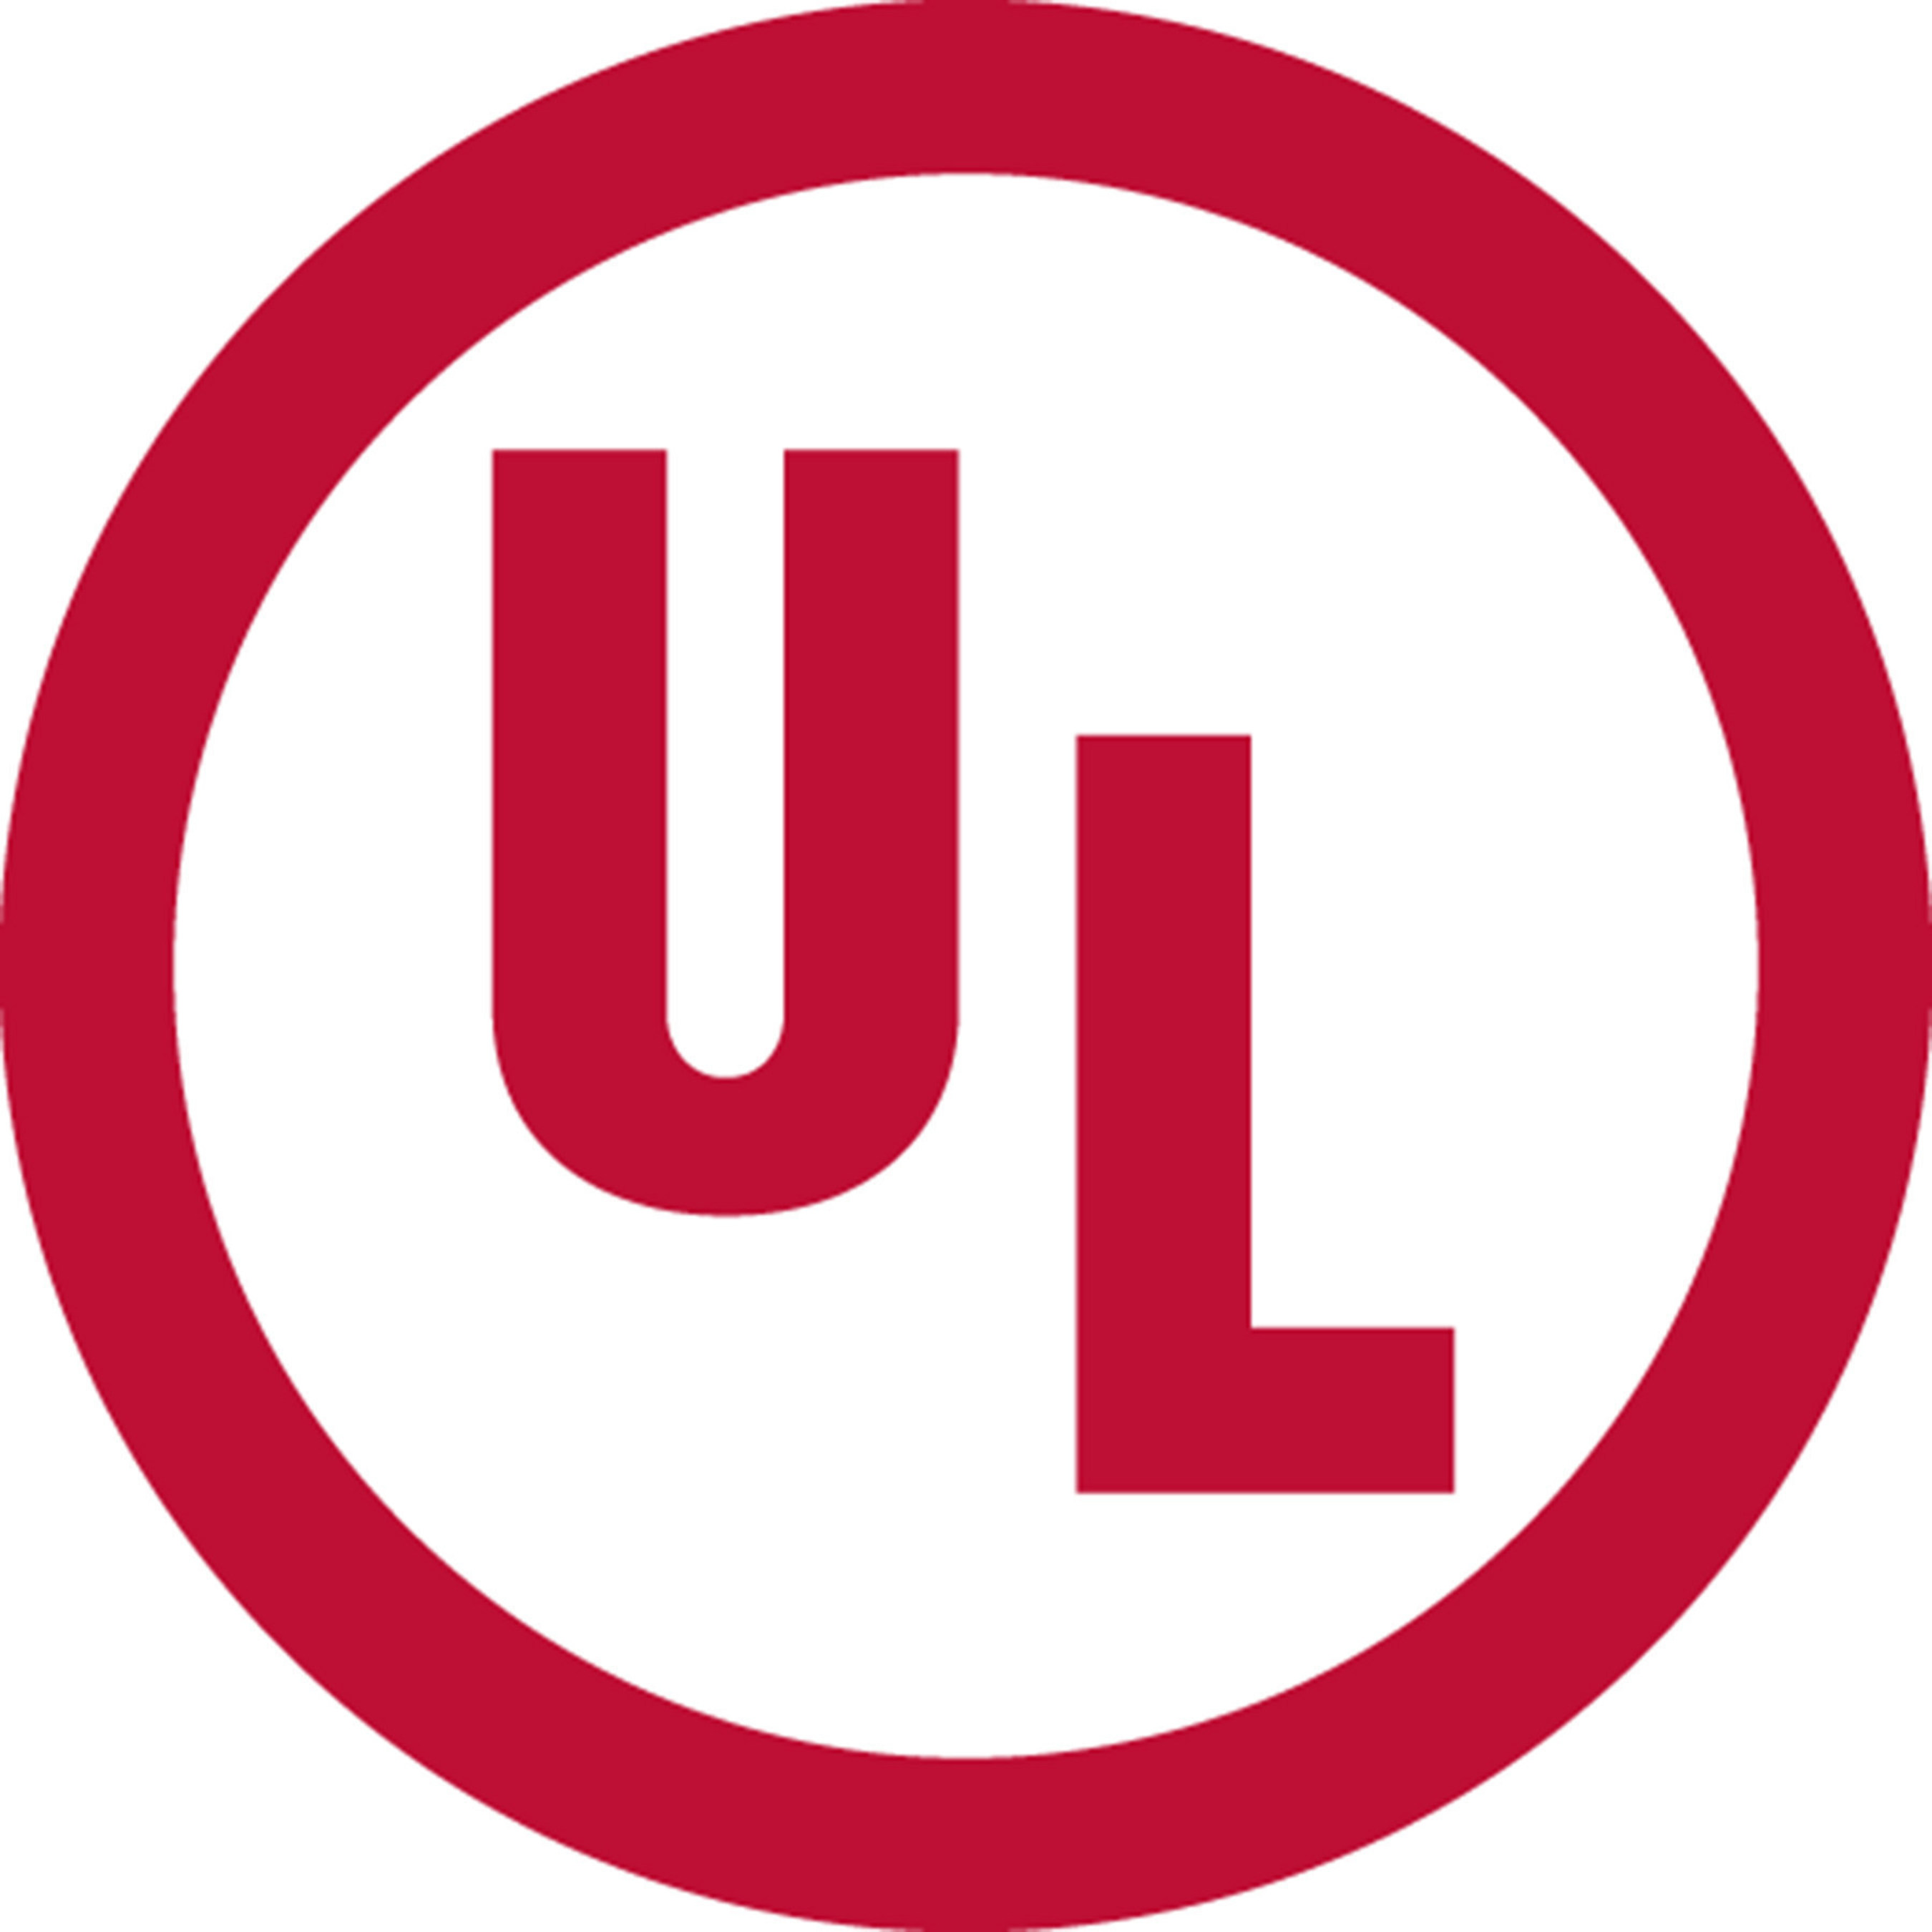 UL Logo (PRNewsFoto/UL)